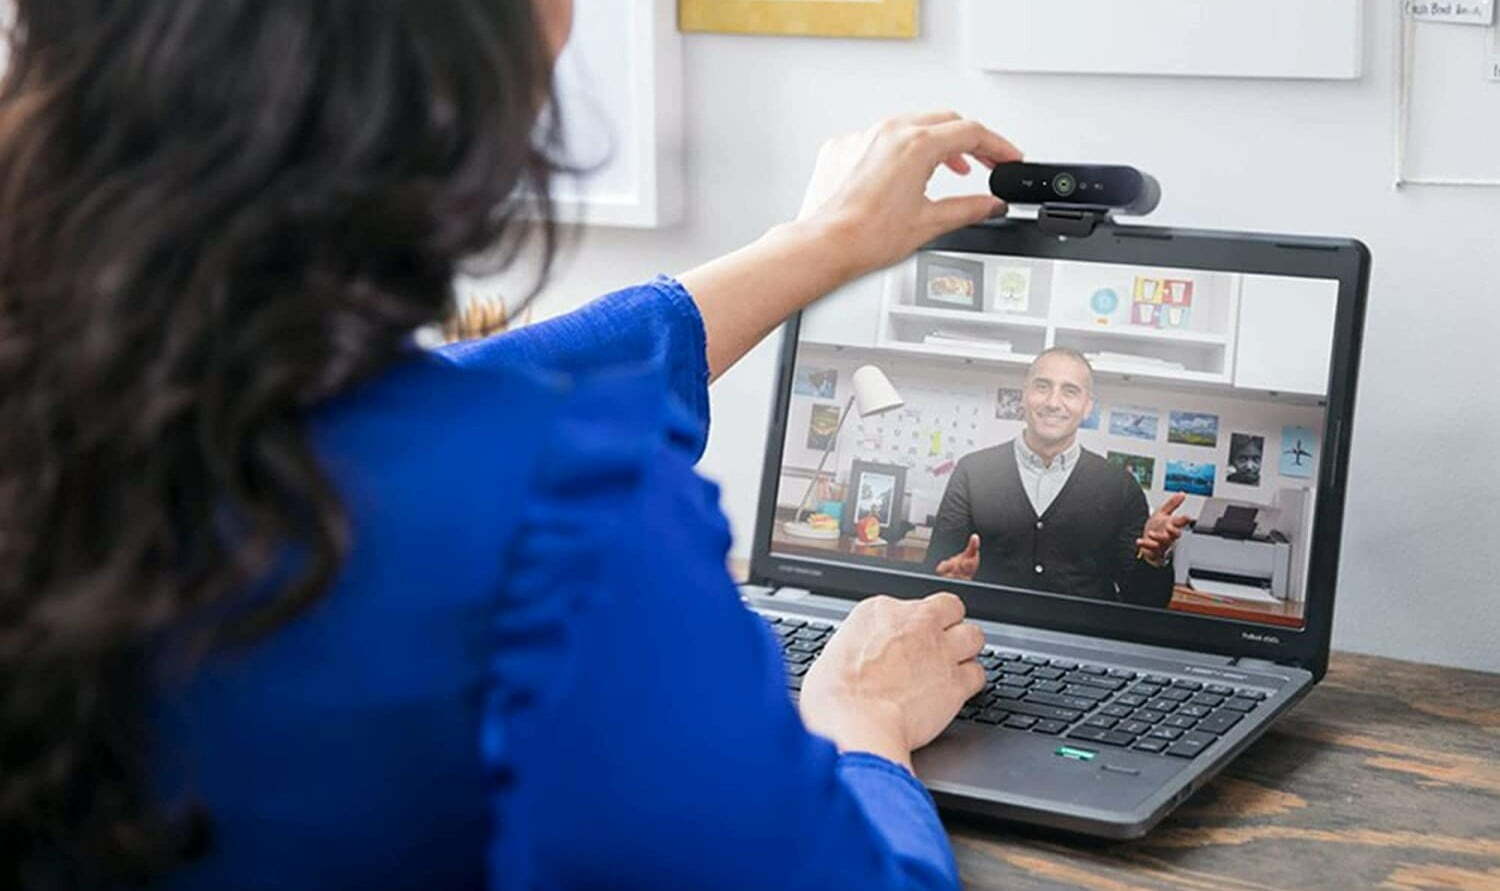 10 Best Webcams for Skype in 2023